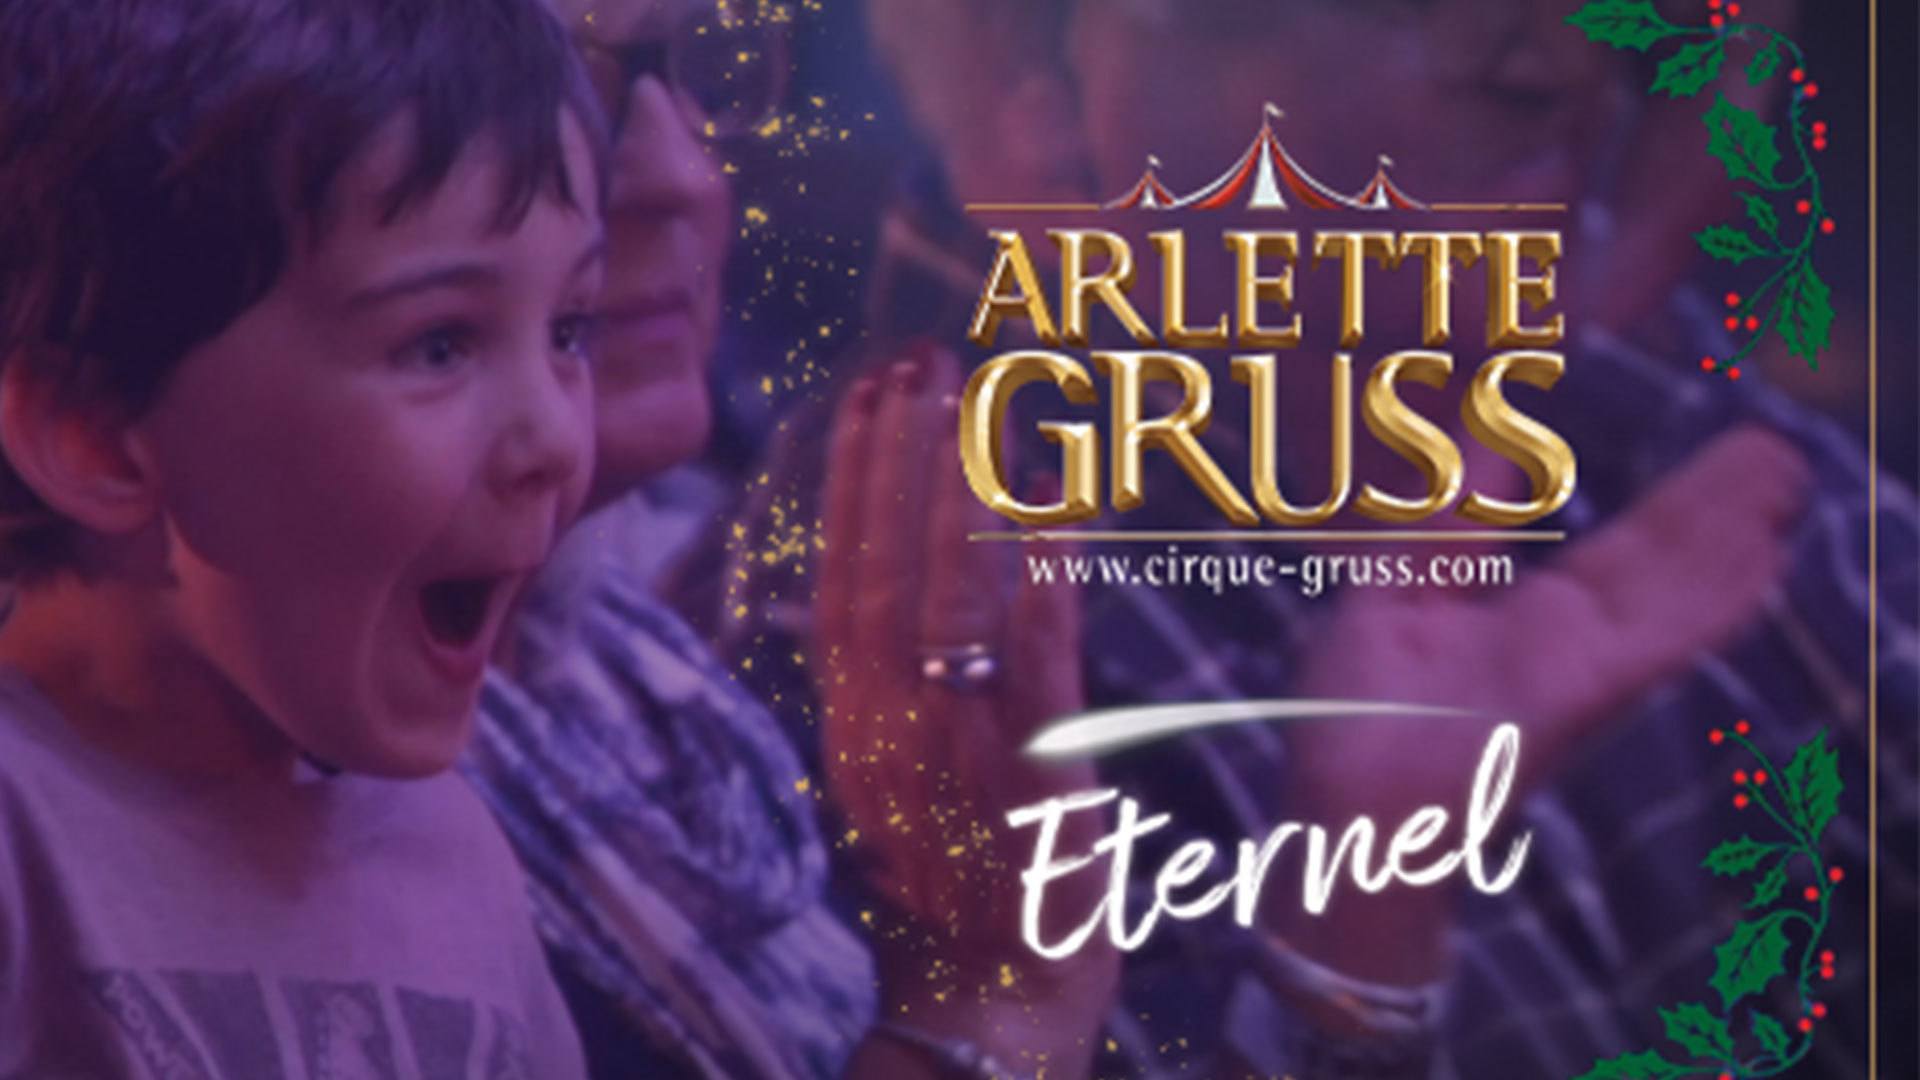 Affiche du spectacle Eternel du cirque Arlette Gruss